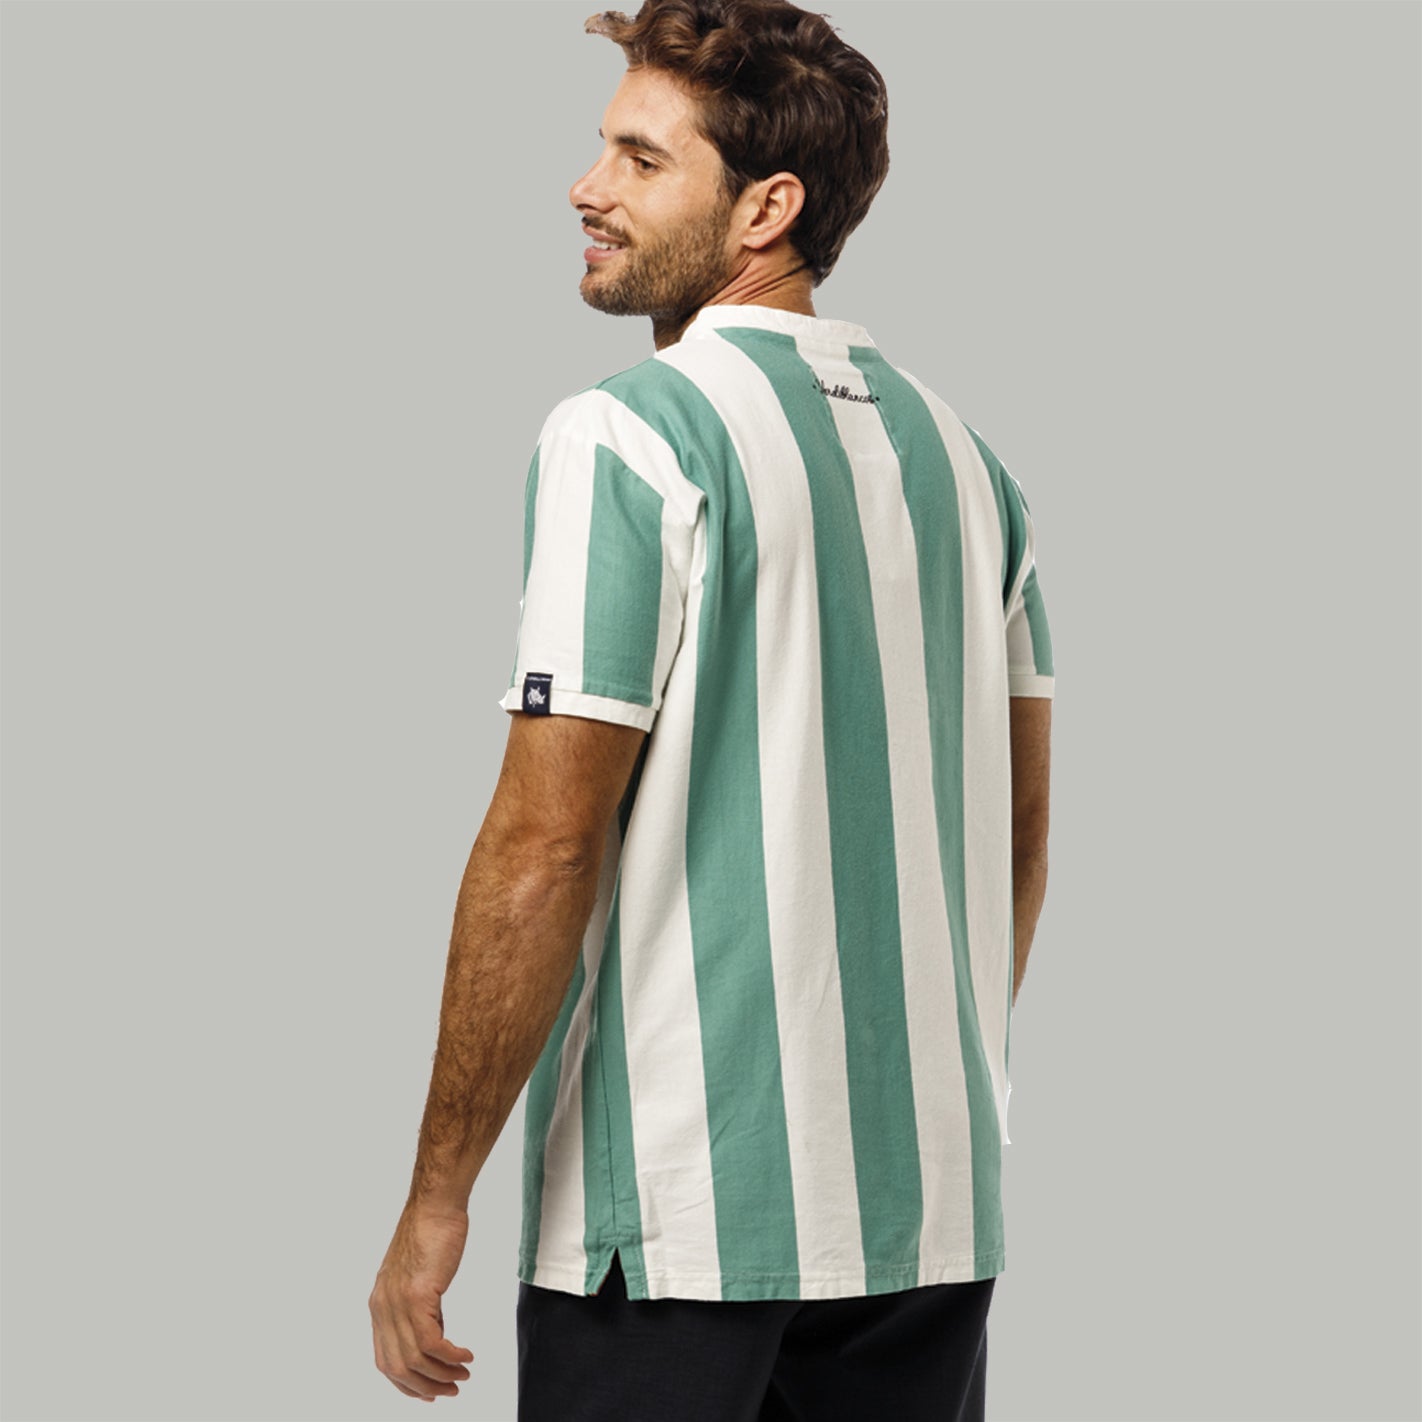 Camiseta Betis Skyline - Bufandea - Camiseta personalizada - 1907